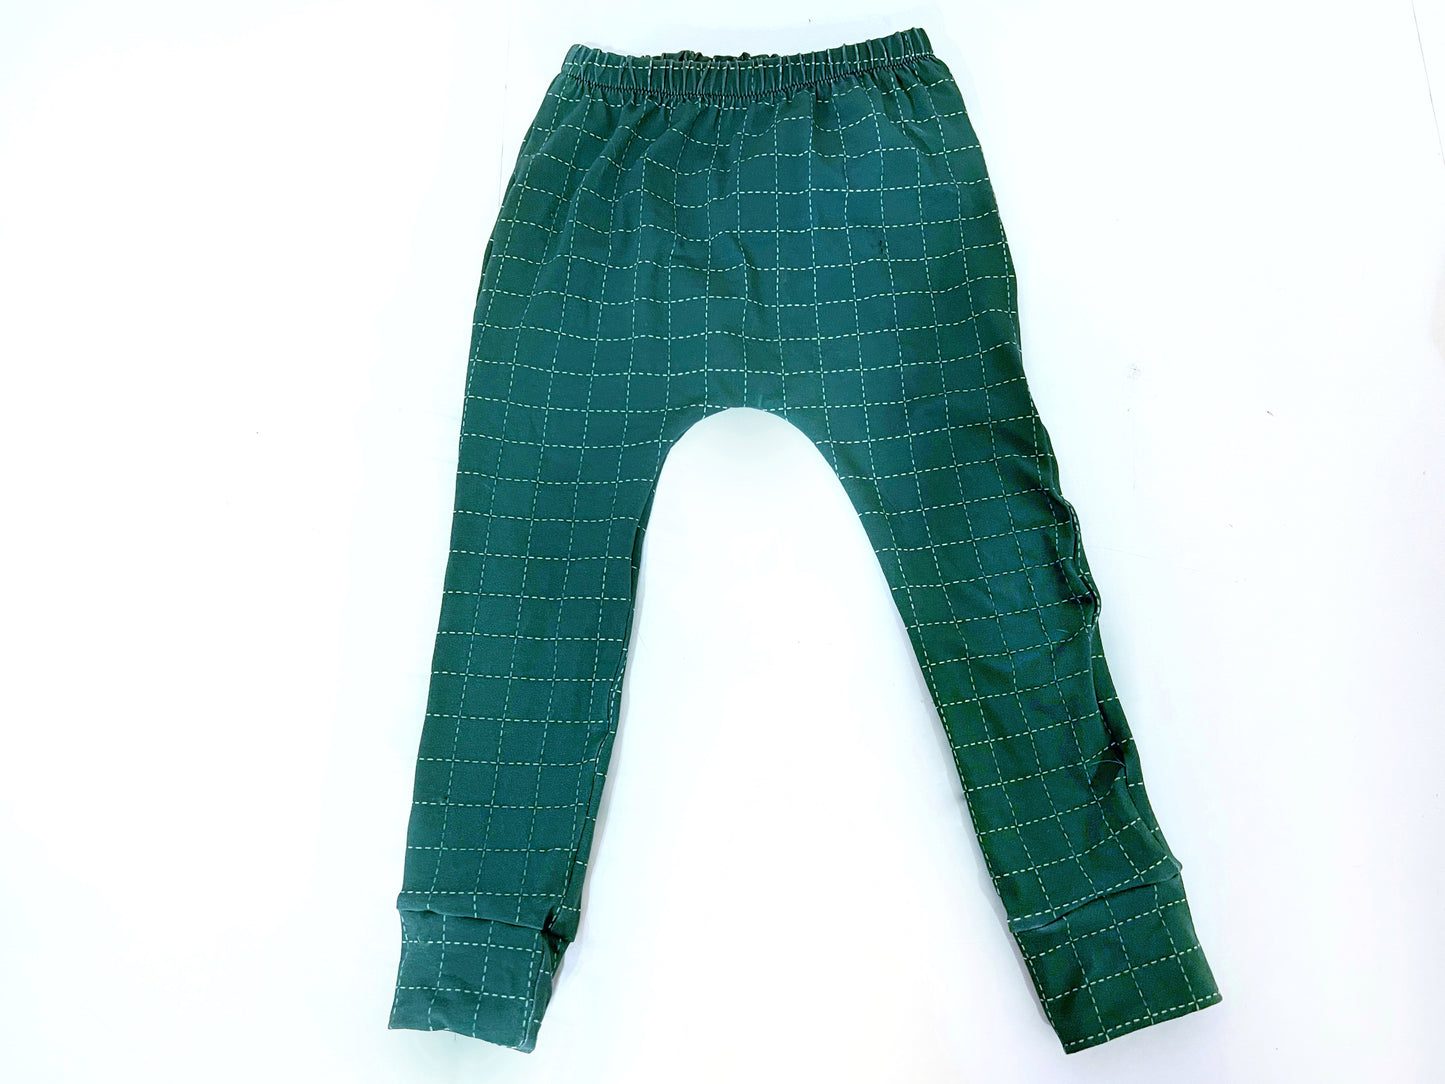 Rts | size 4 gusset pants